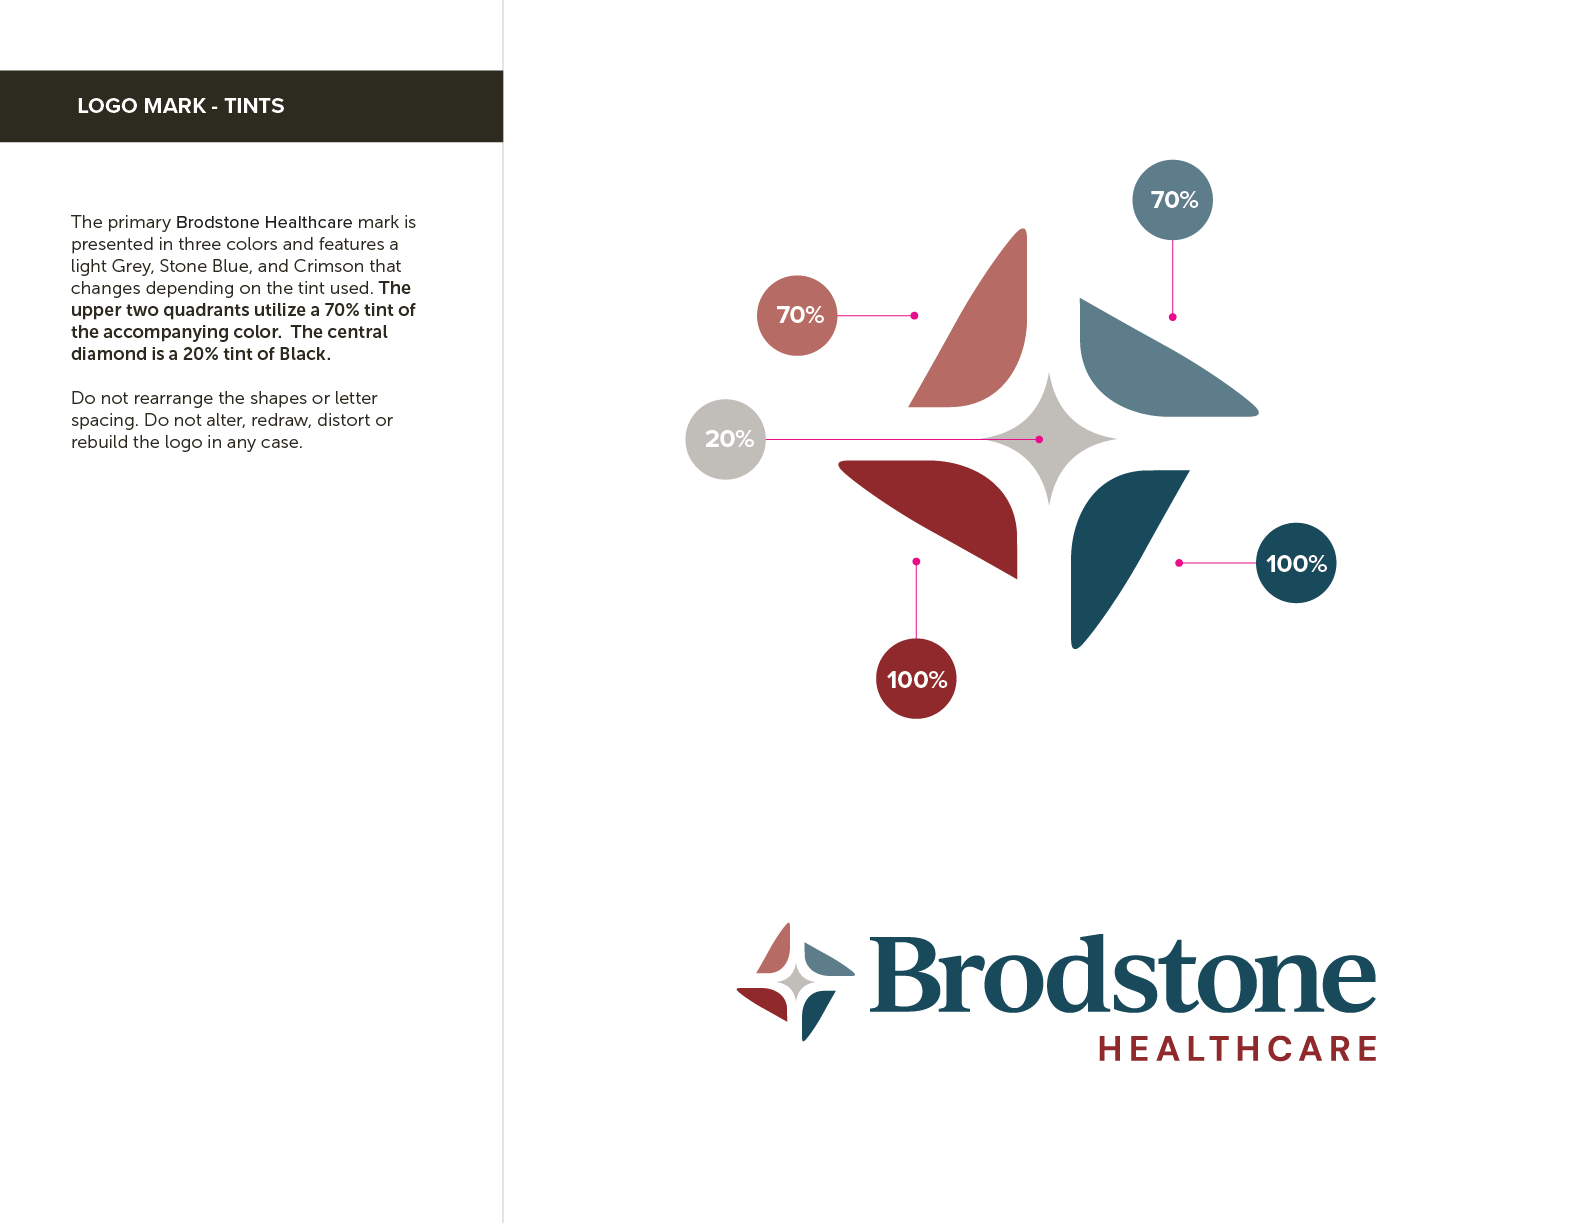 Brodstone Healthcare Brand Guide Tints